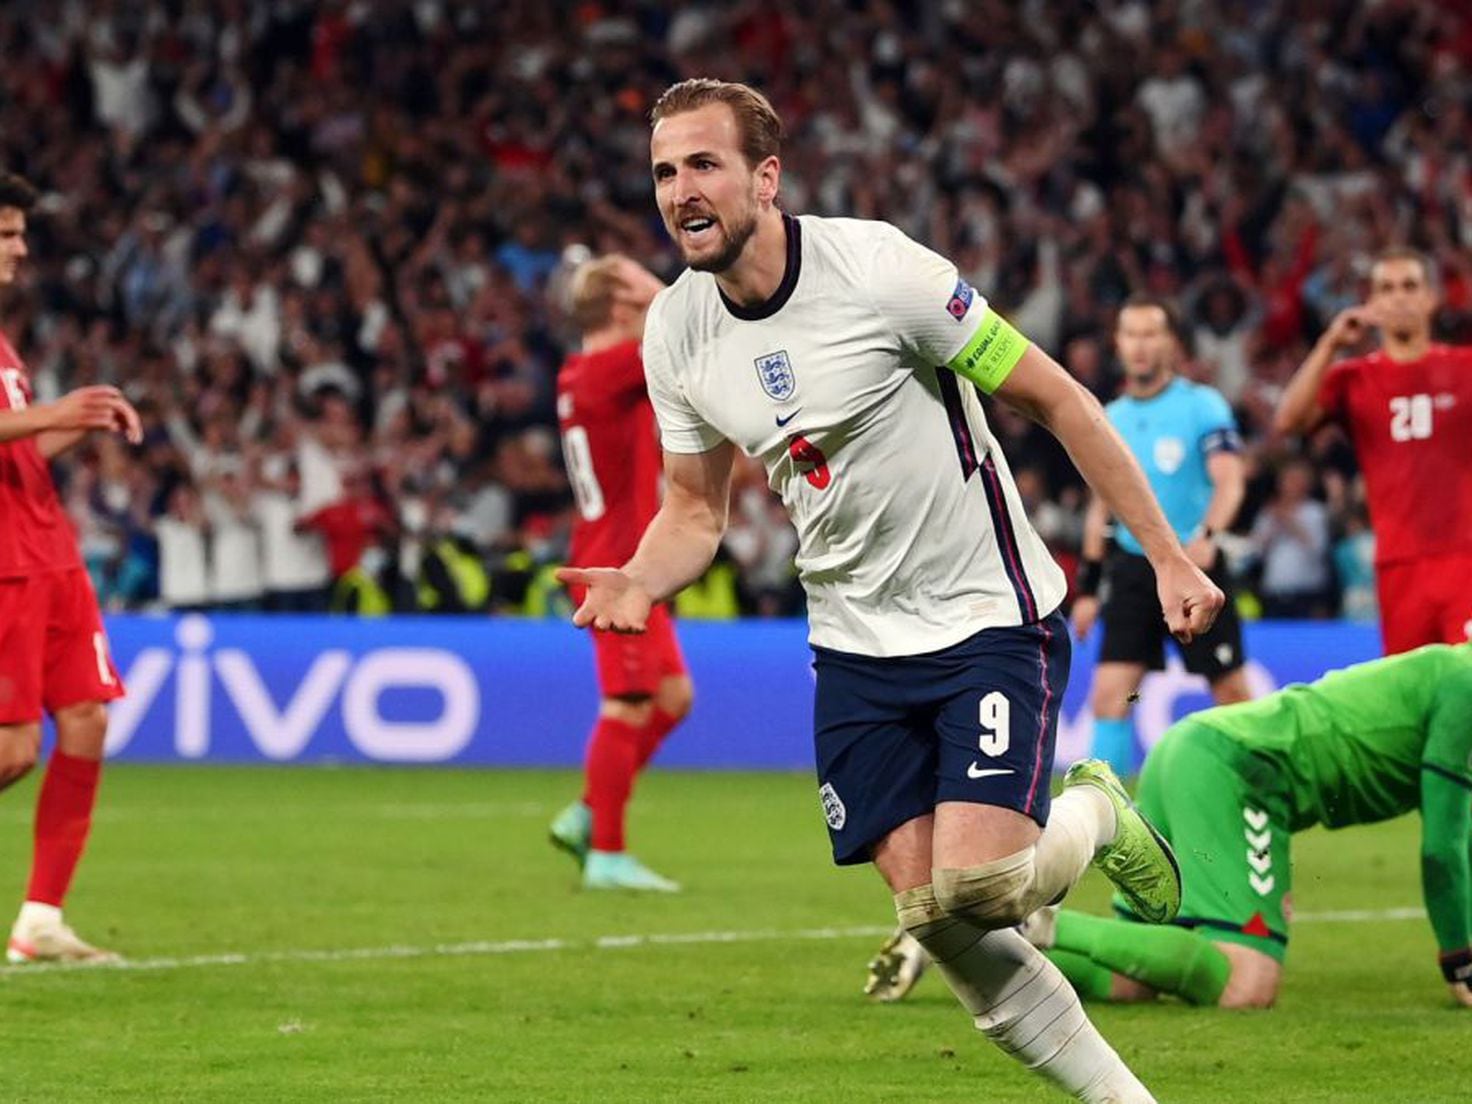 Euro 2020: Football coming home? Harry Kane's goal fires England into final